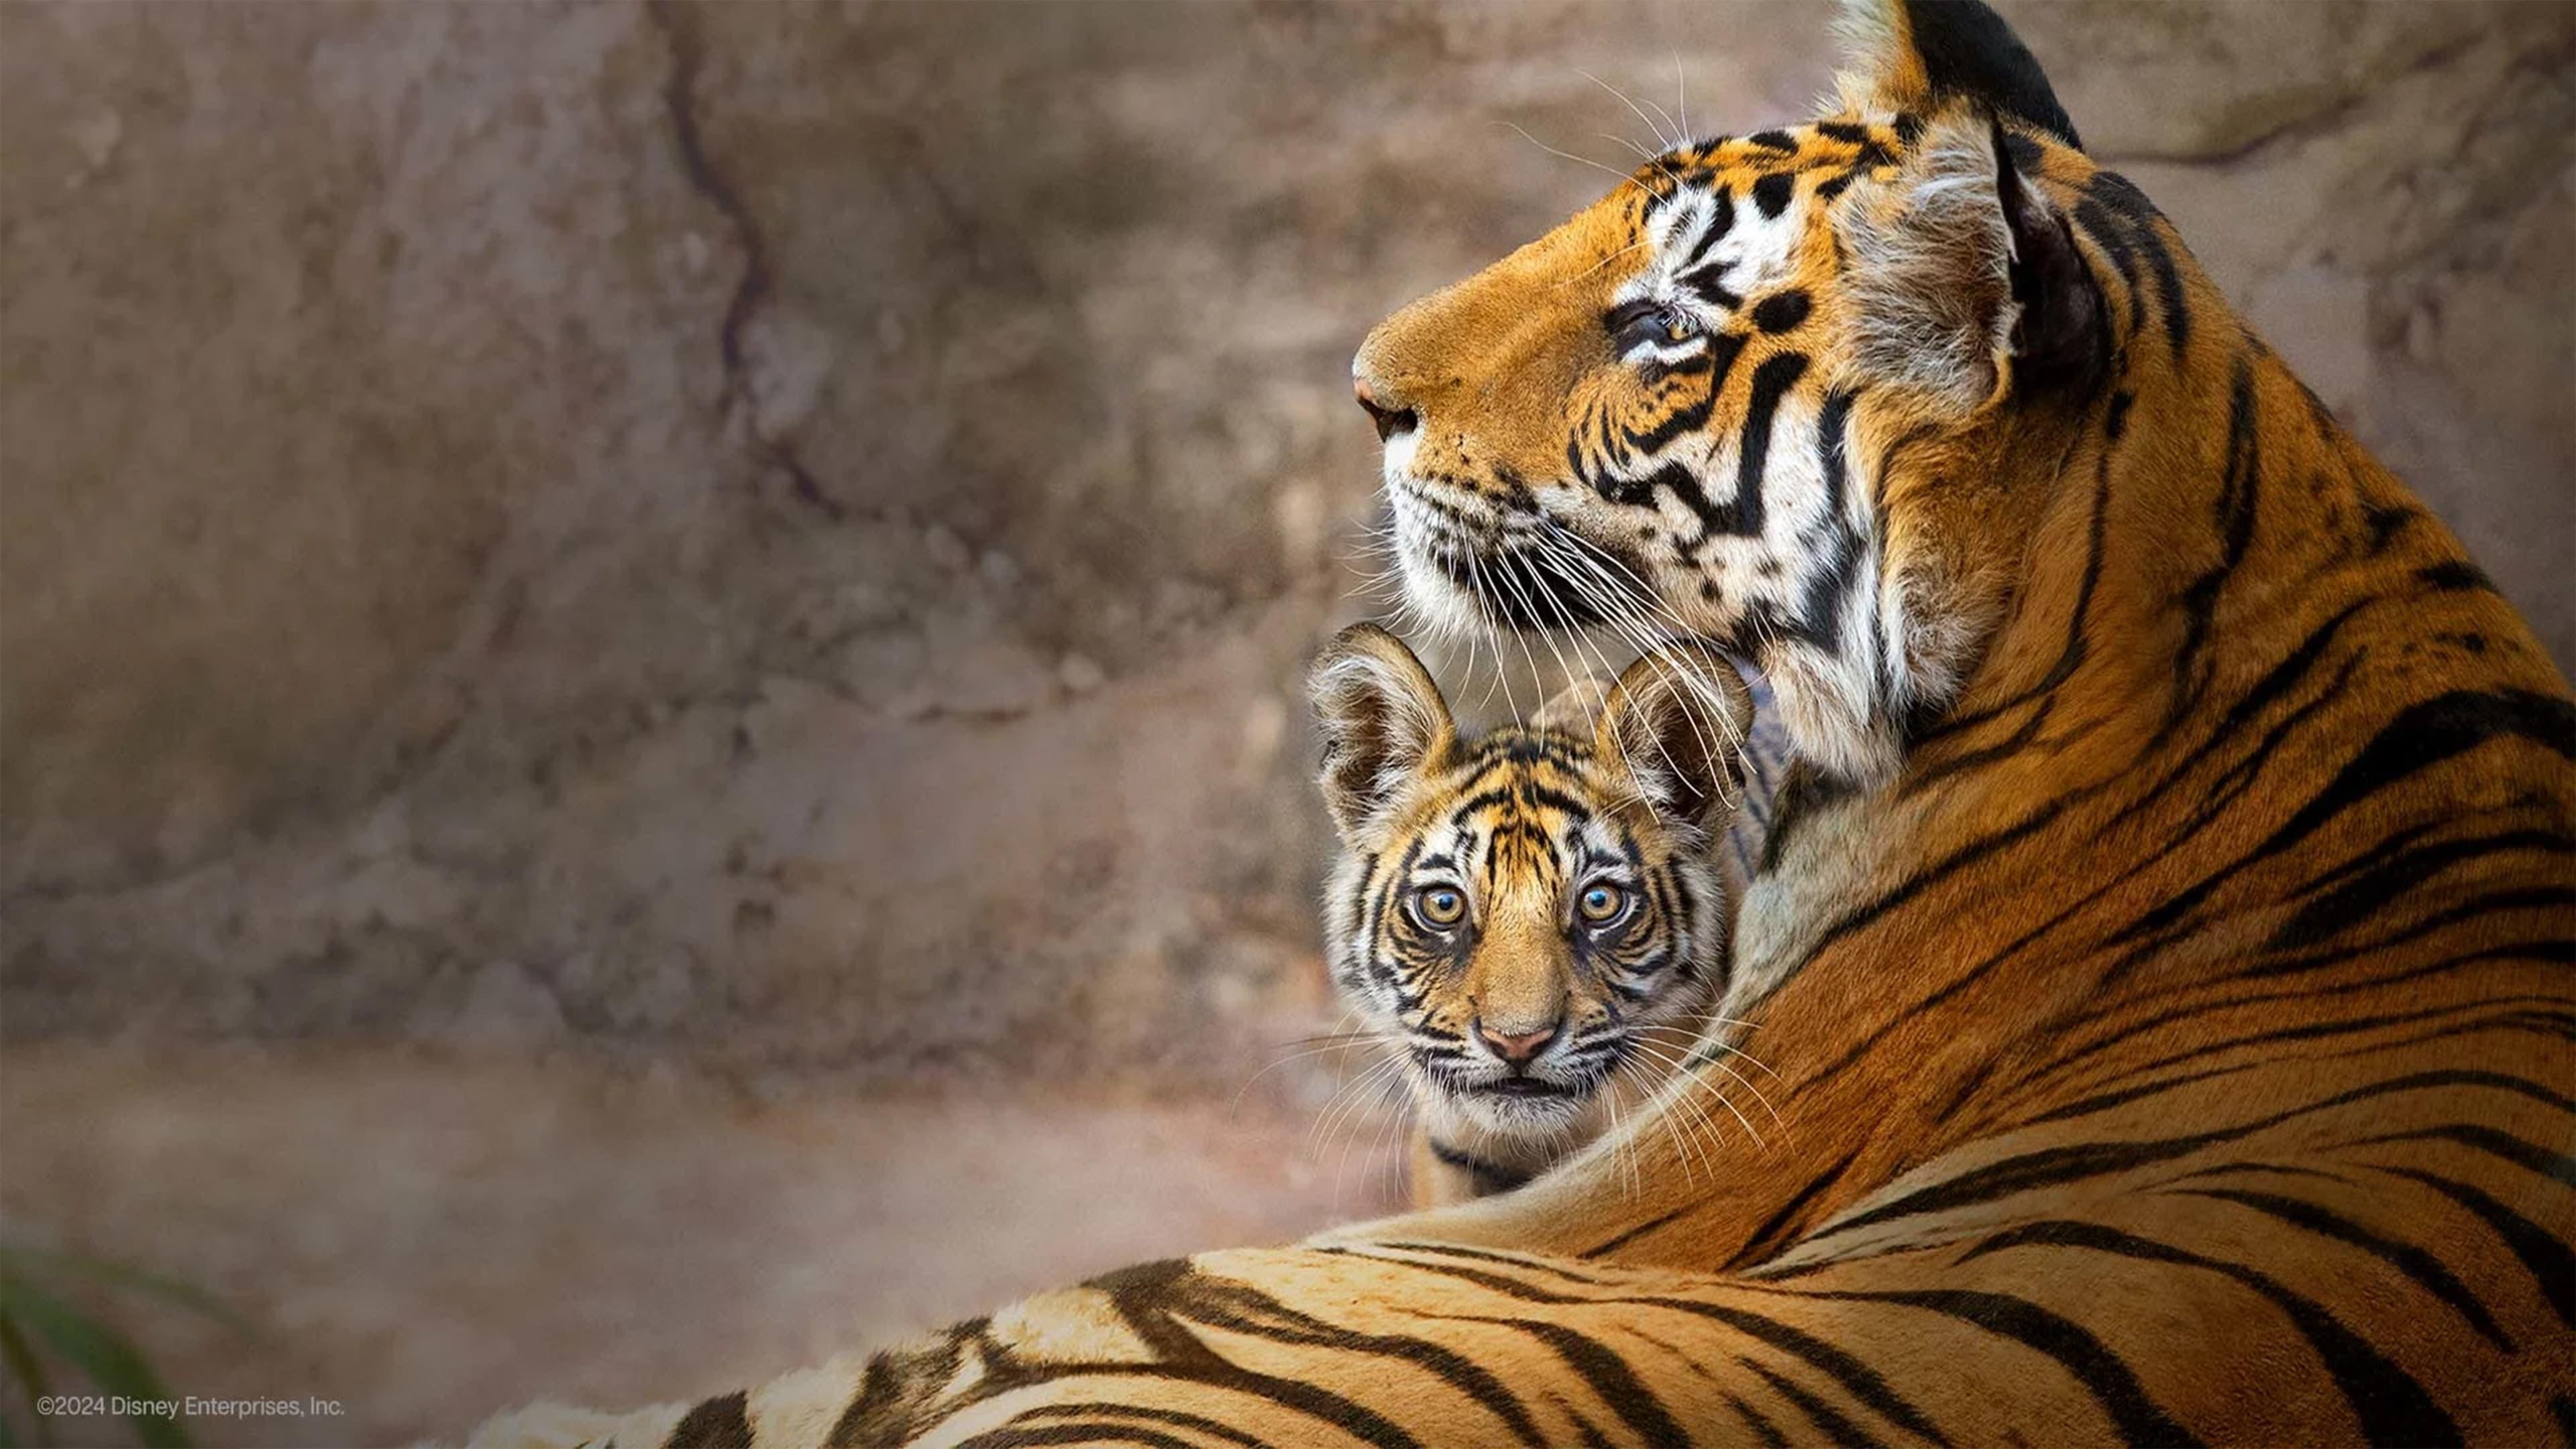 Tiger backdrop